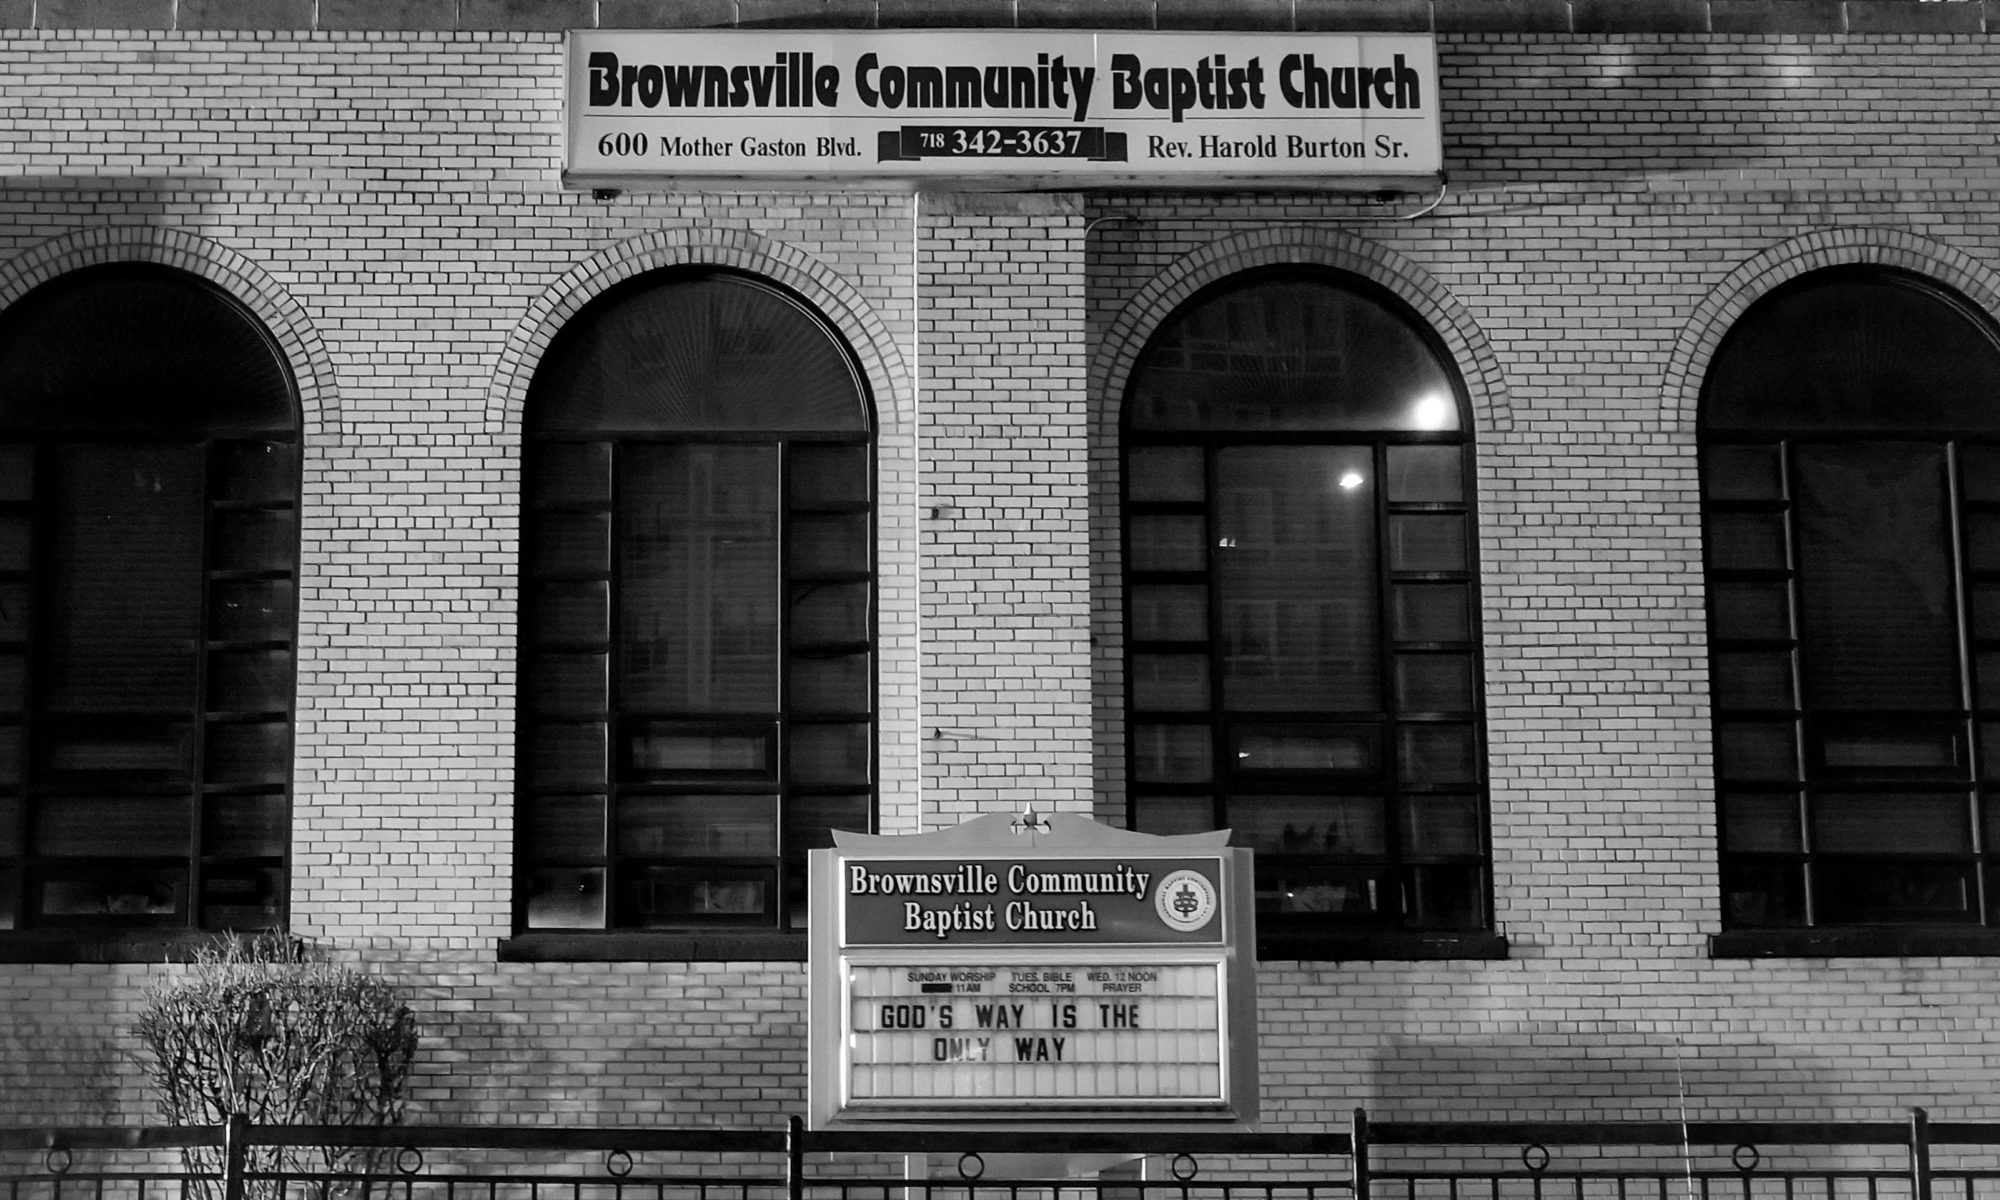 Contact – Brownsville Community Baptist Church